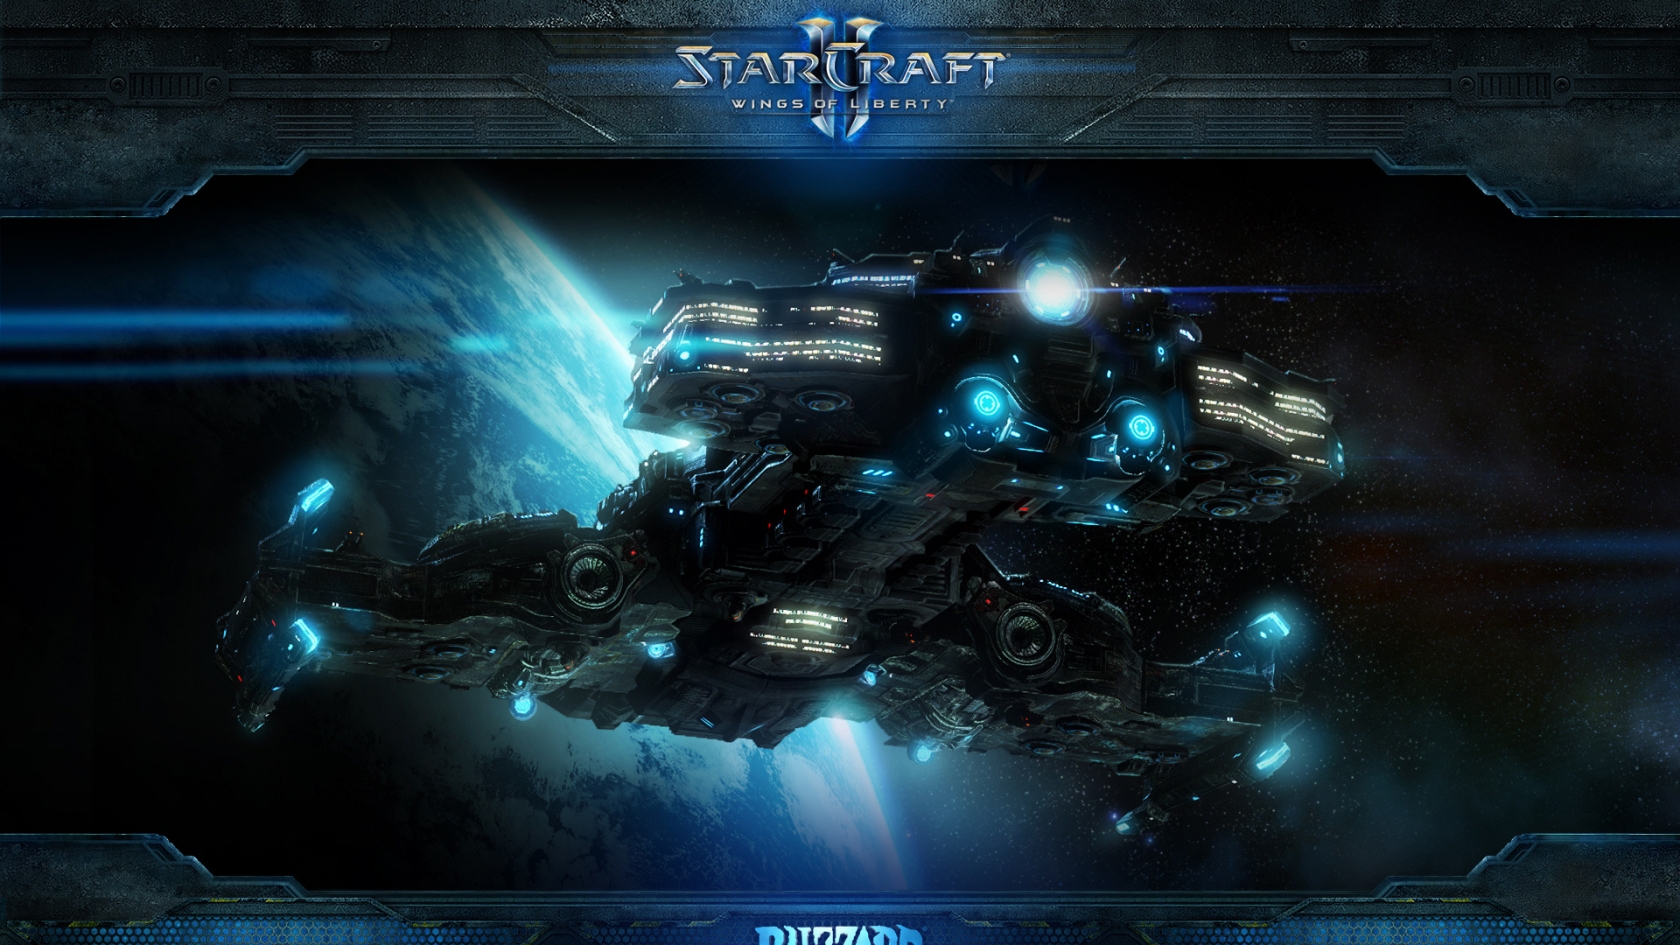 Starcraft 2 Ship for 1680 x 945 HDTV resolution